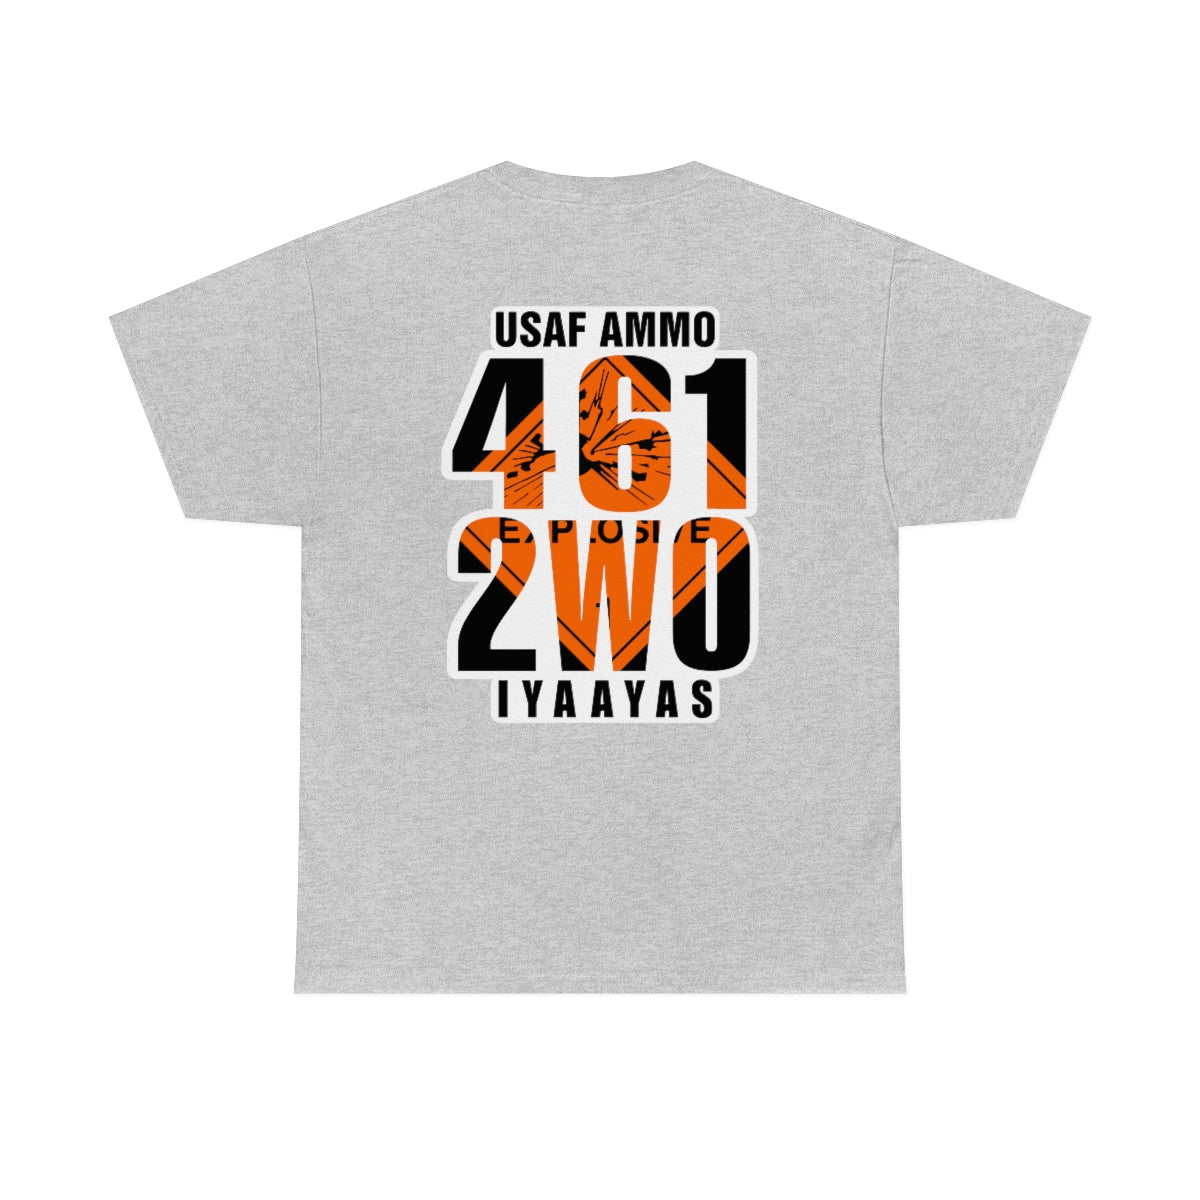 USAF AMMO 461 2W0 Explosive Placard Background IYAAYAS Unisex Heavy Cotton T-Shirt